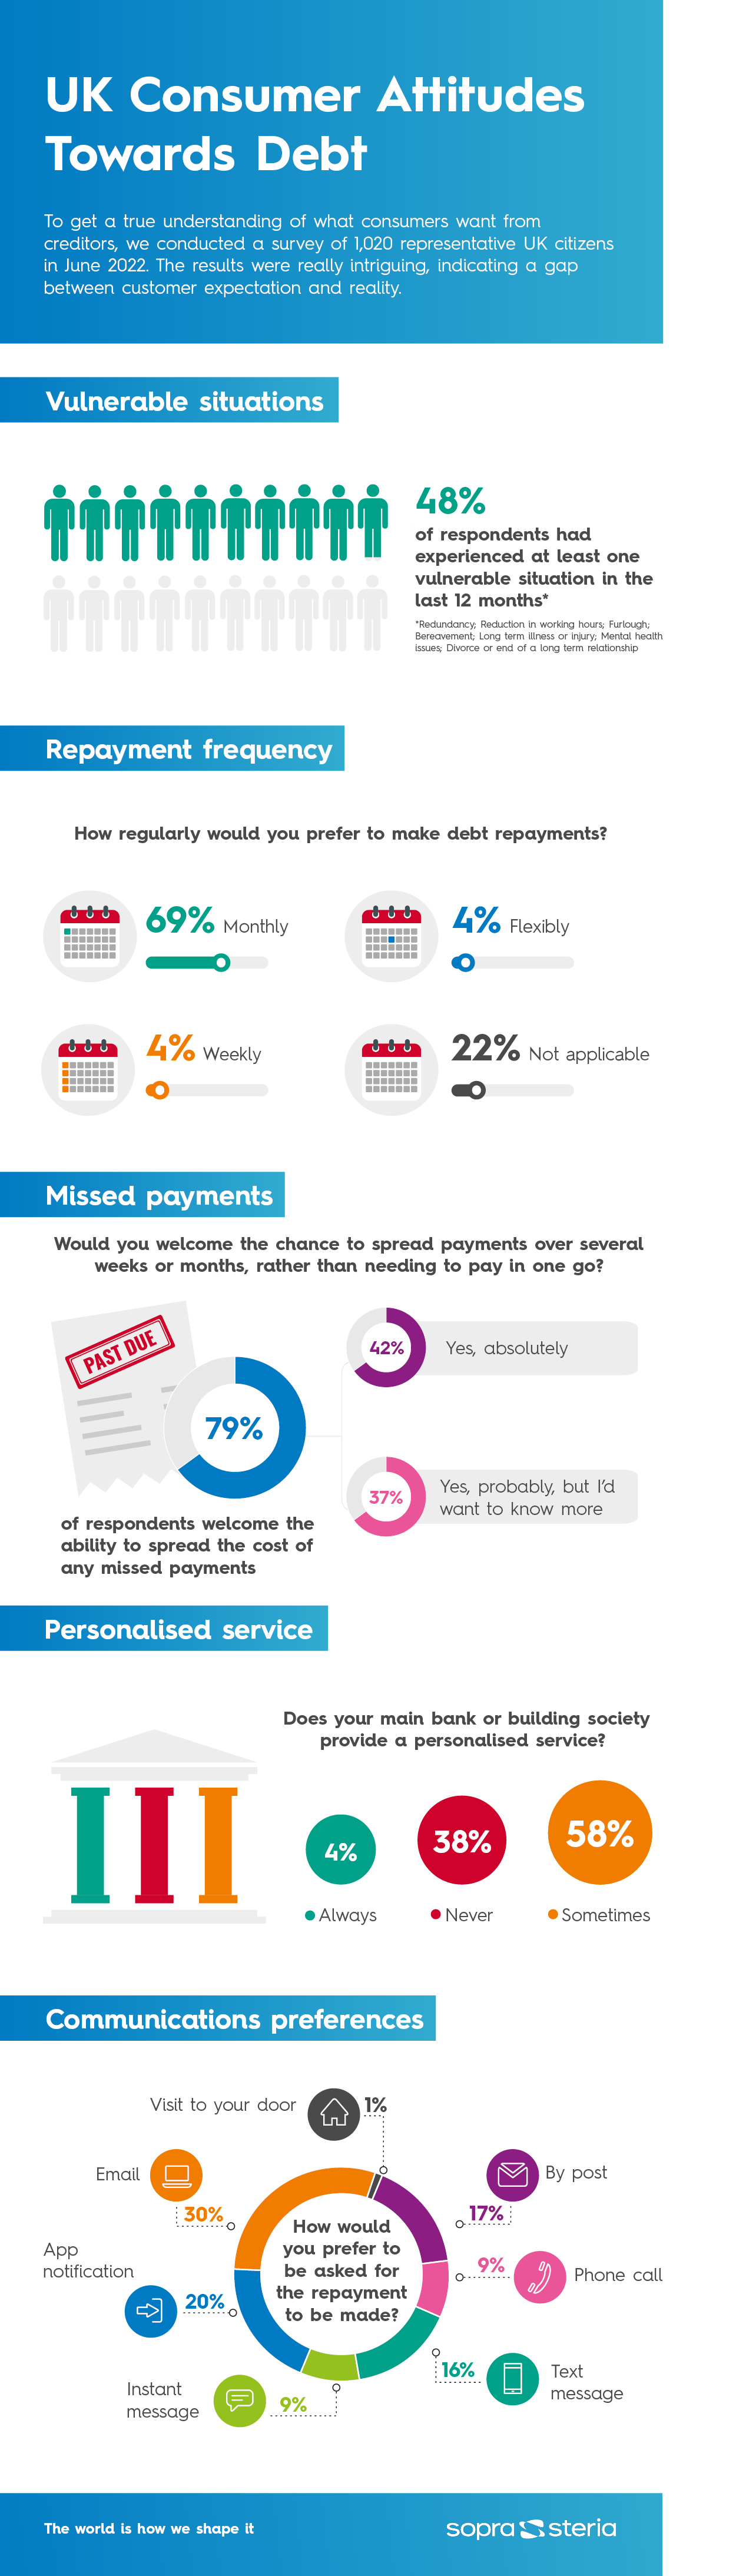 Infographic showing statistics around UK consumer attitudes towards debt. See transcription for full details